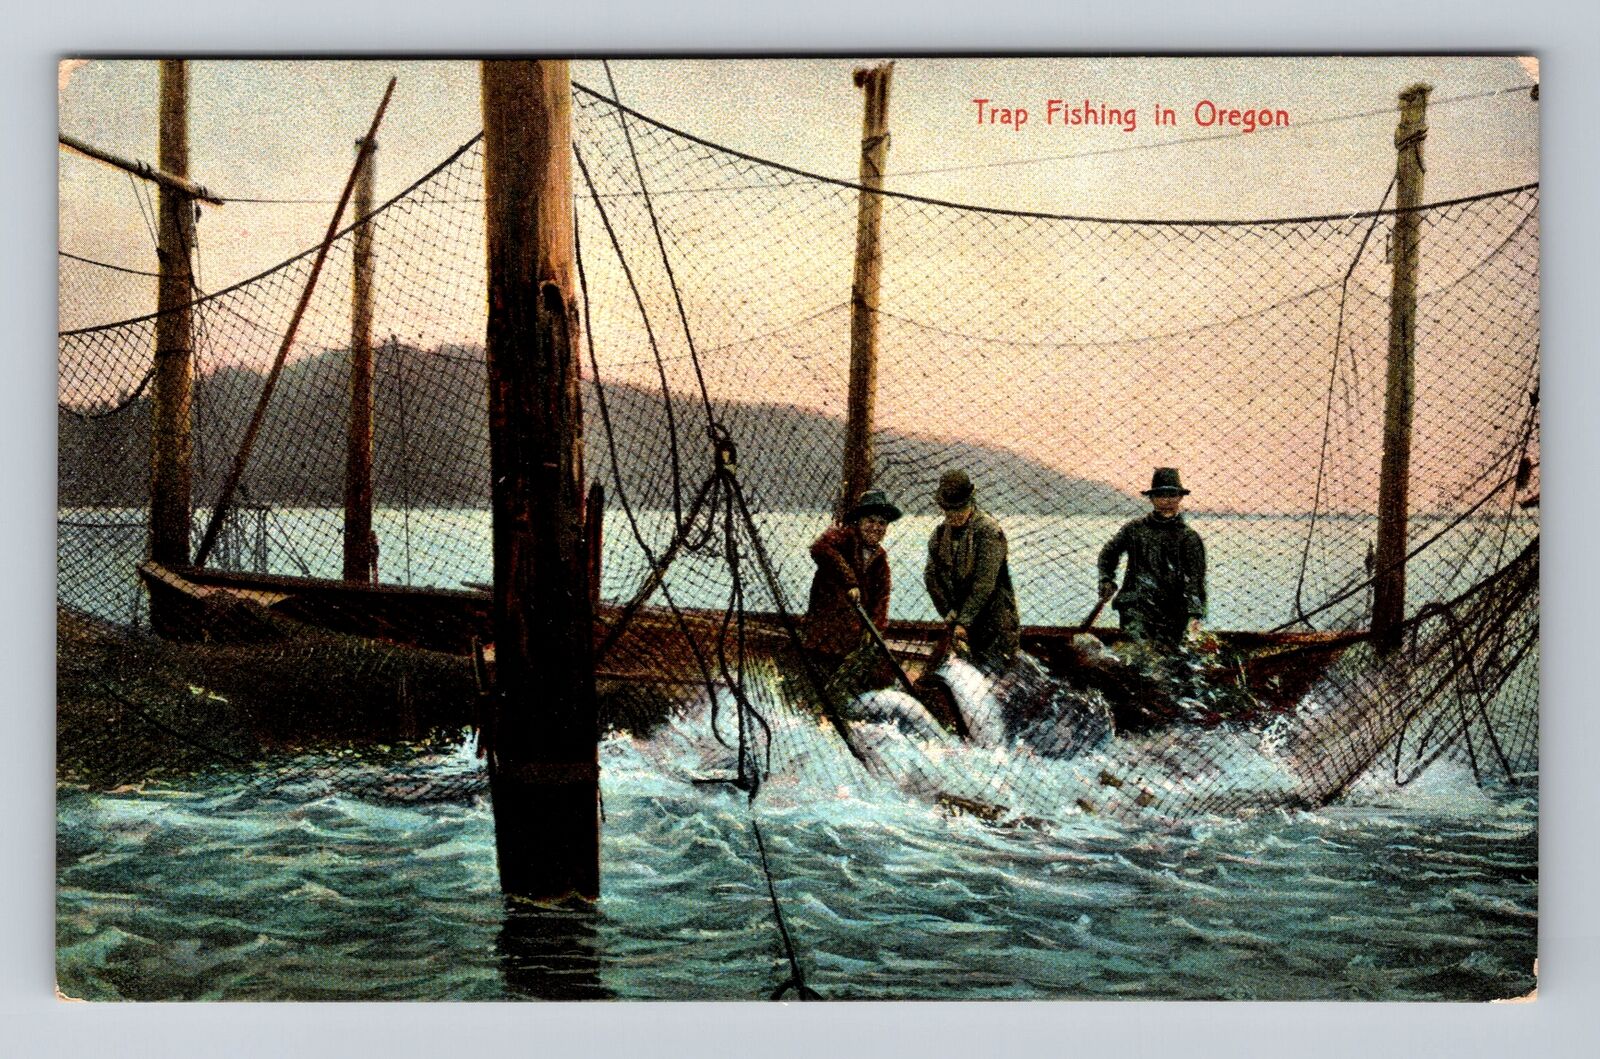 OR-Oregon, Men Trap Fishing in Oregon, Antique Souvenir Vintage Postcard